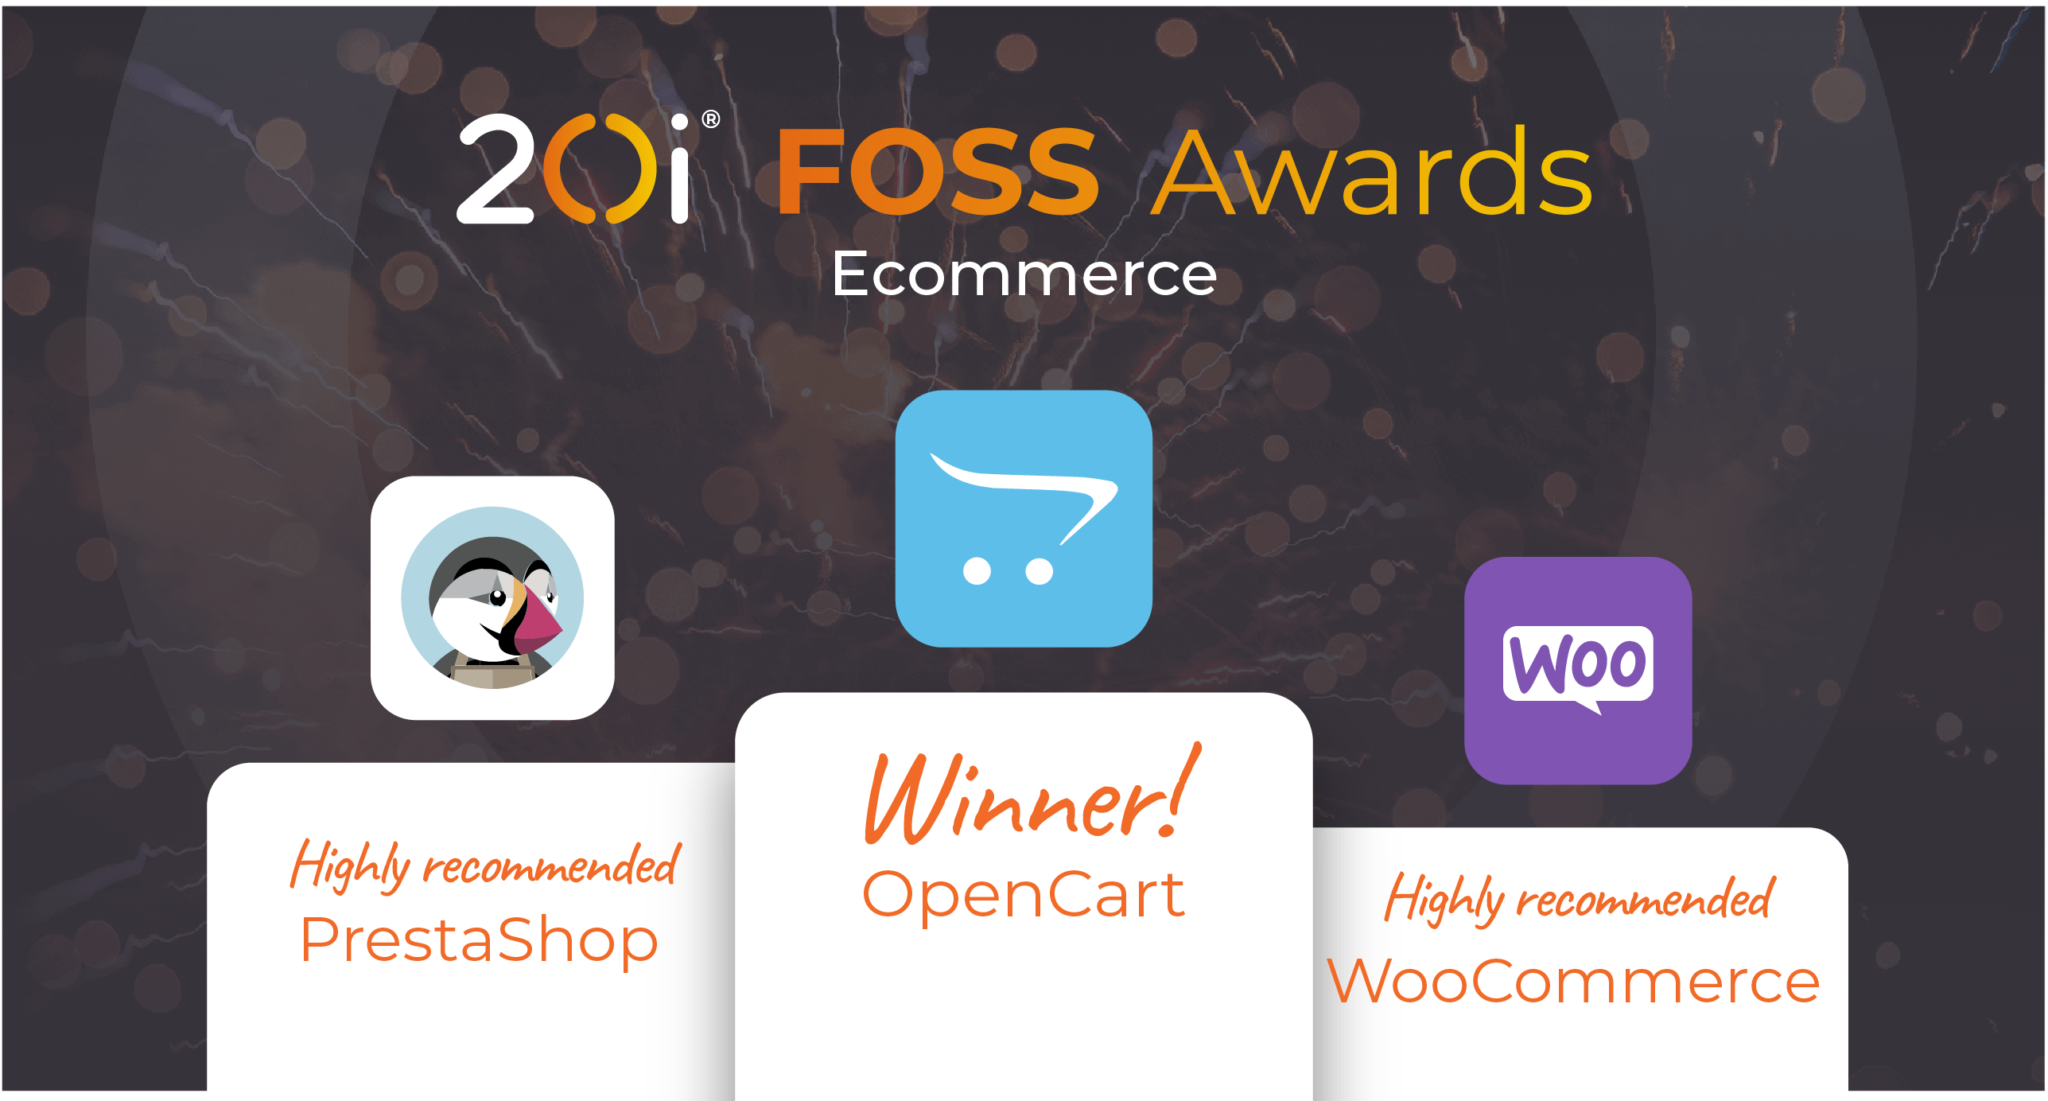 20i foss awards winners 2023 - ecommerce category